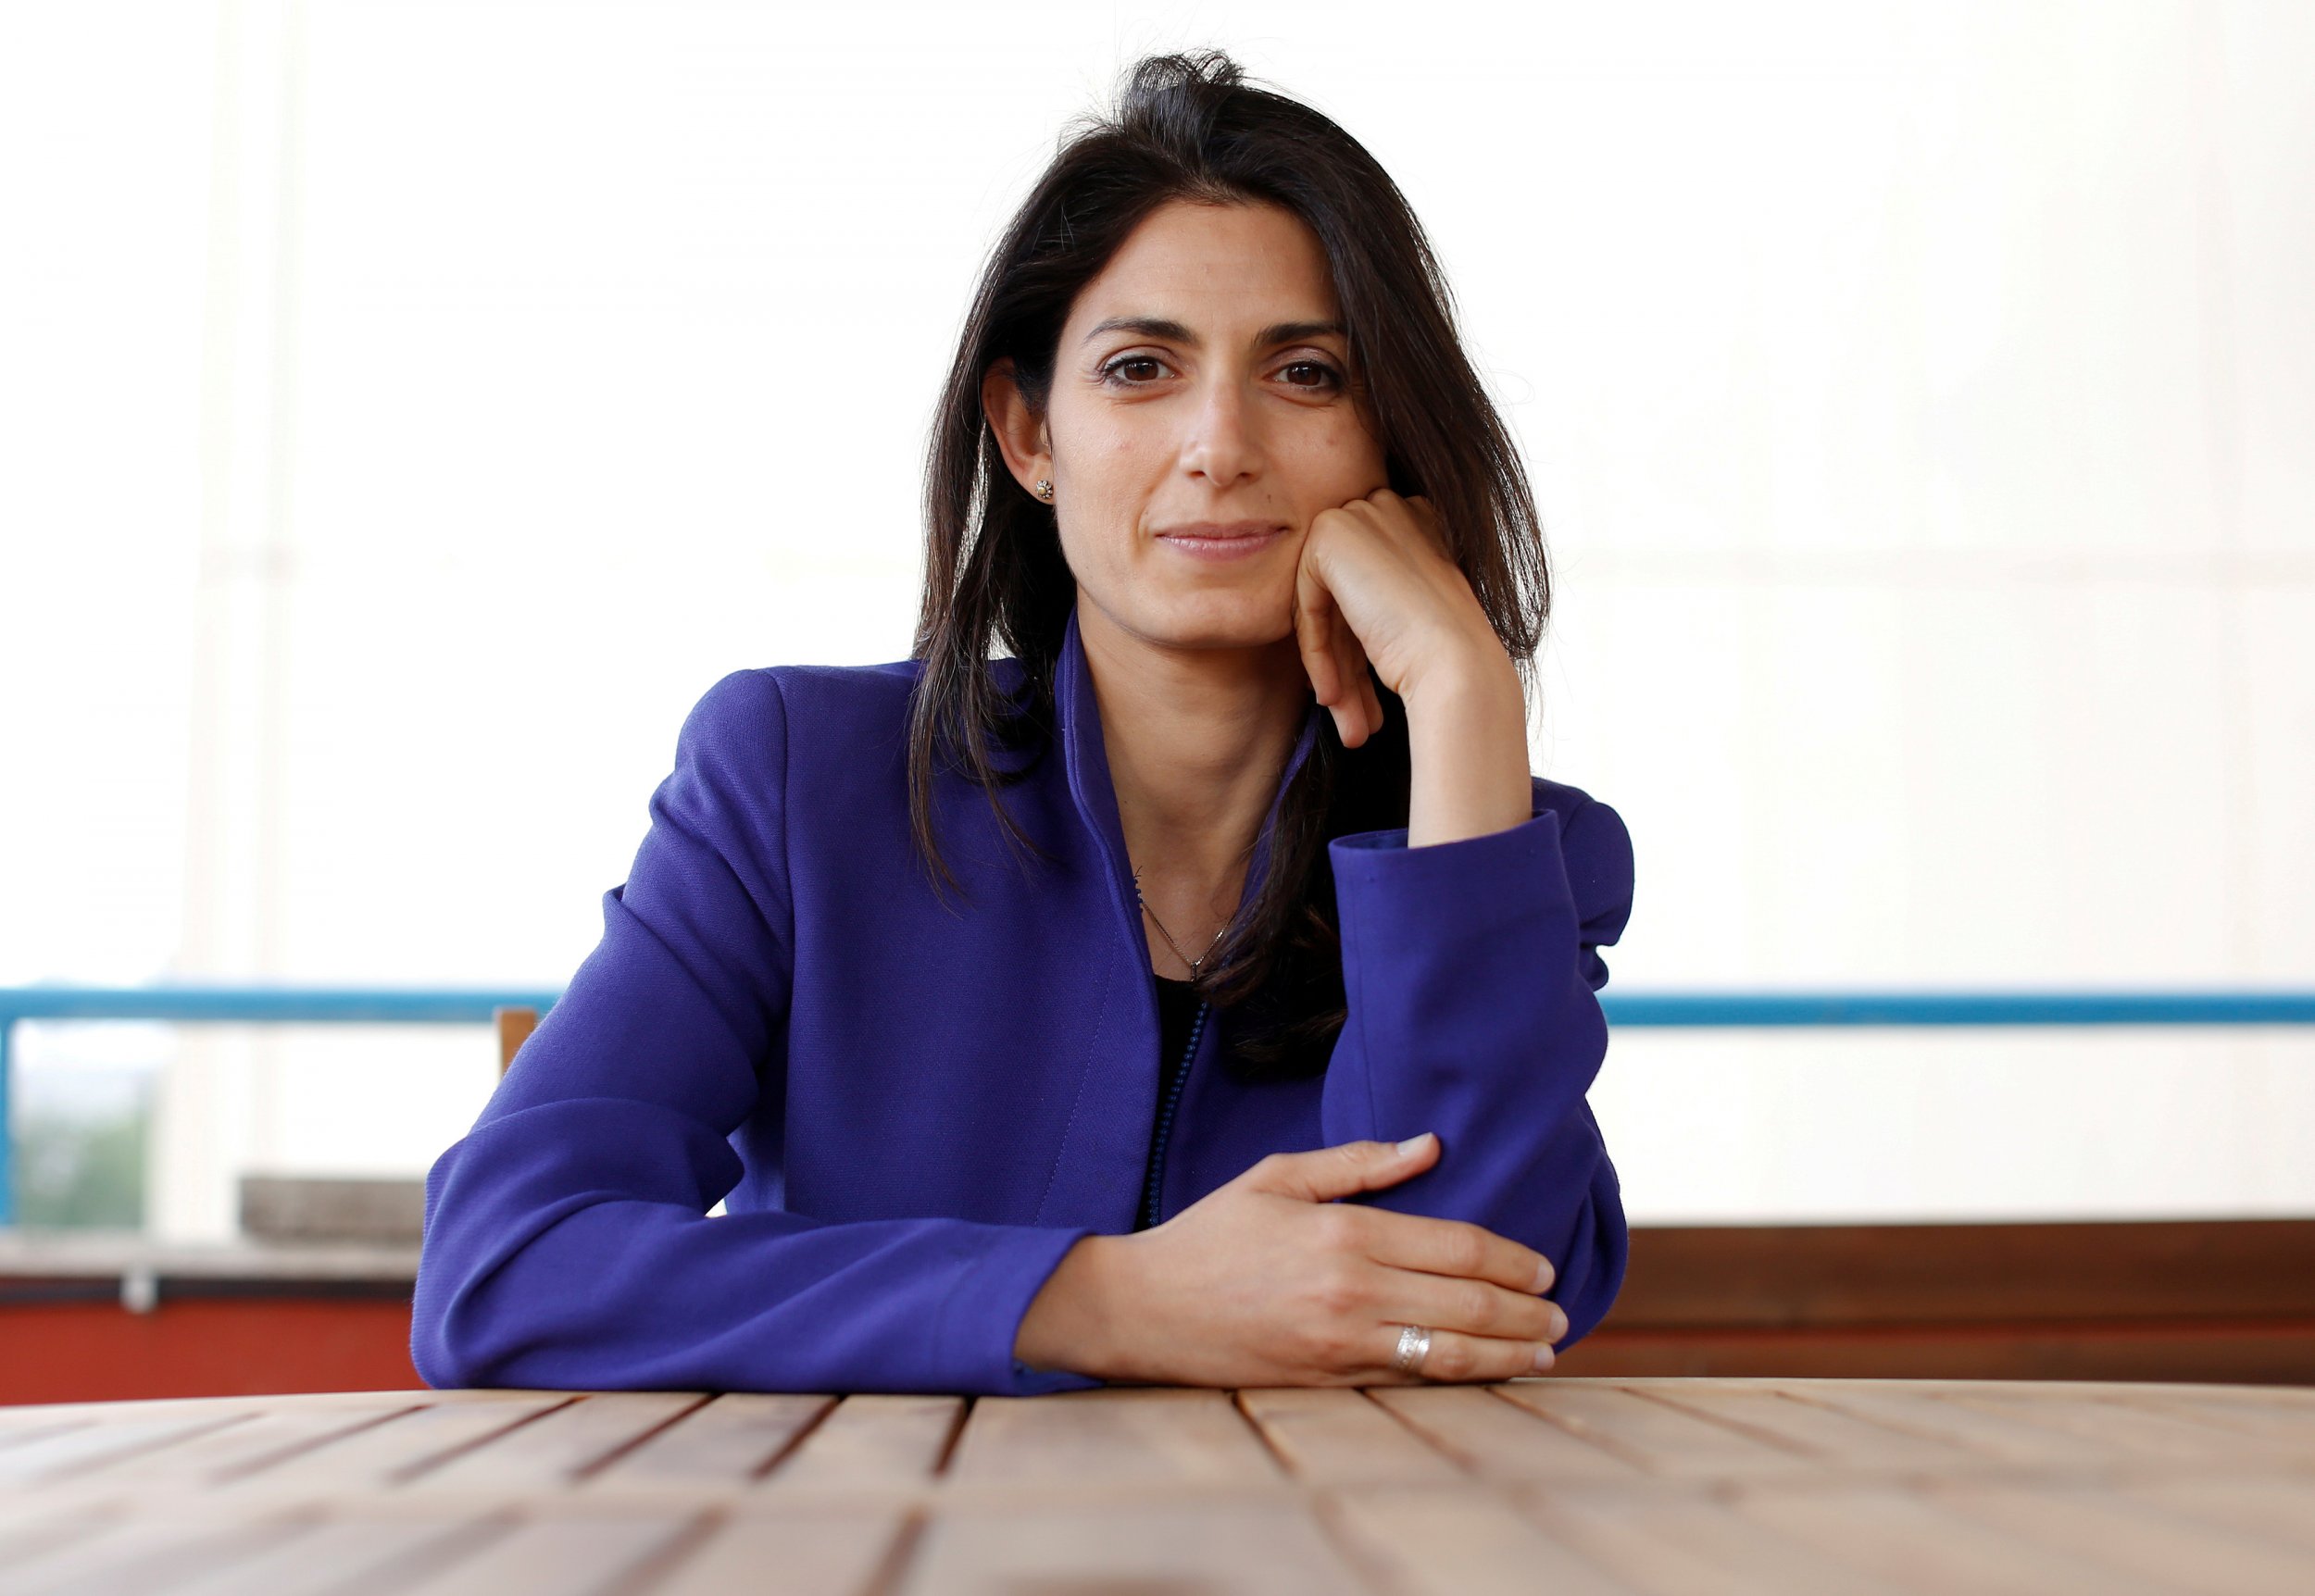 Virginia Raggi elected Romes first woman mayor - CNN